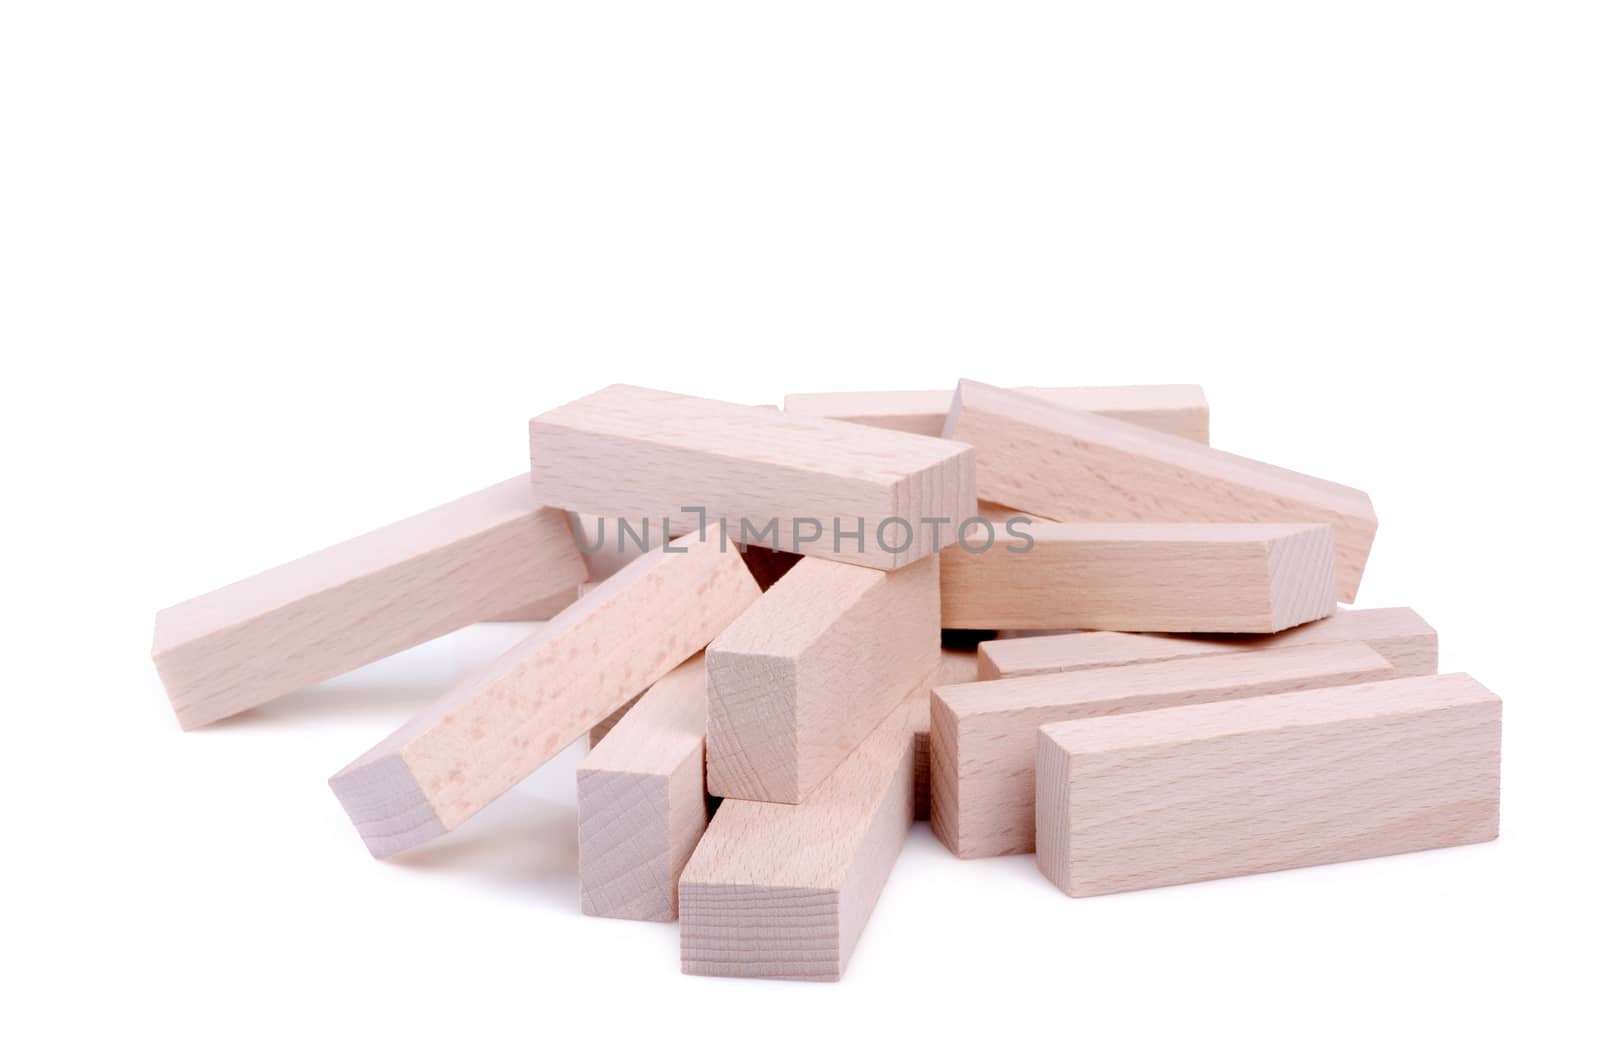 Pile of wooden bricks isolated on white background.